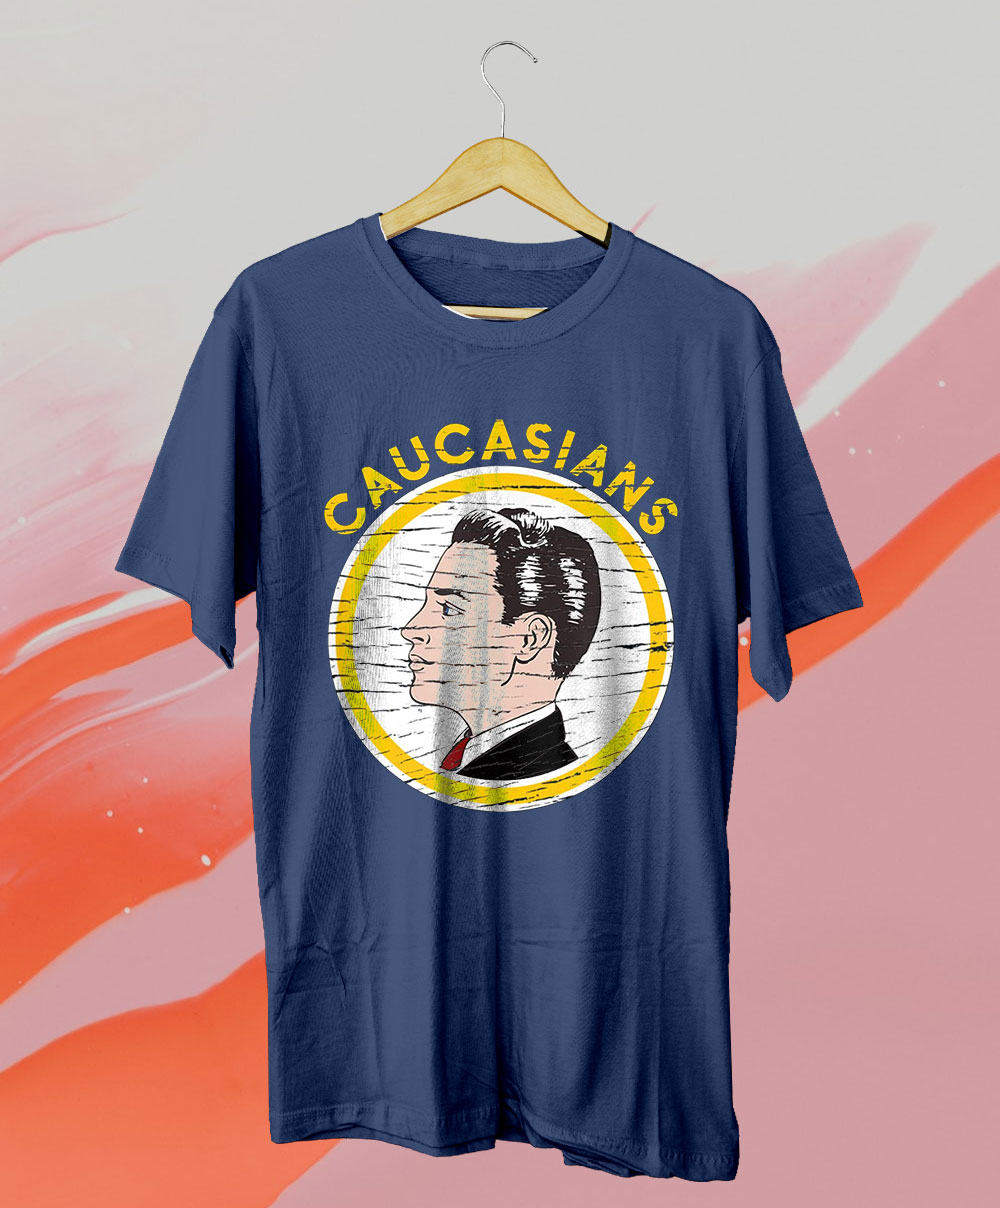 Caucasians T-shirt 